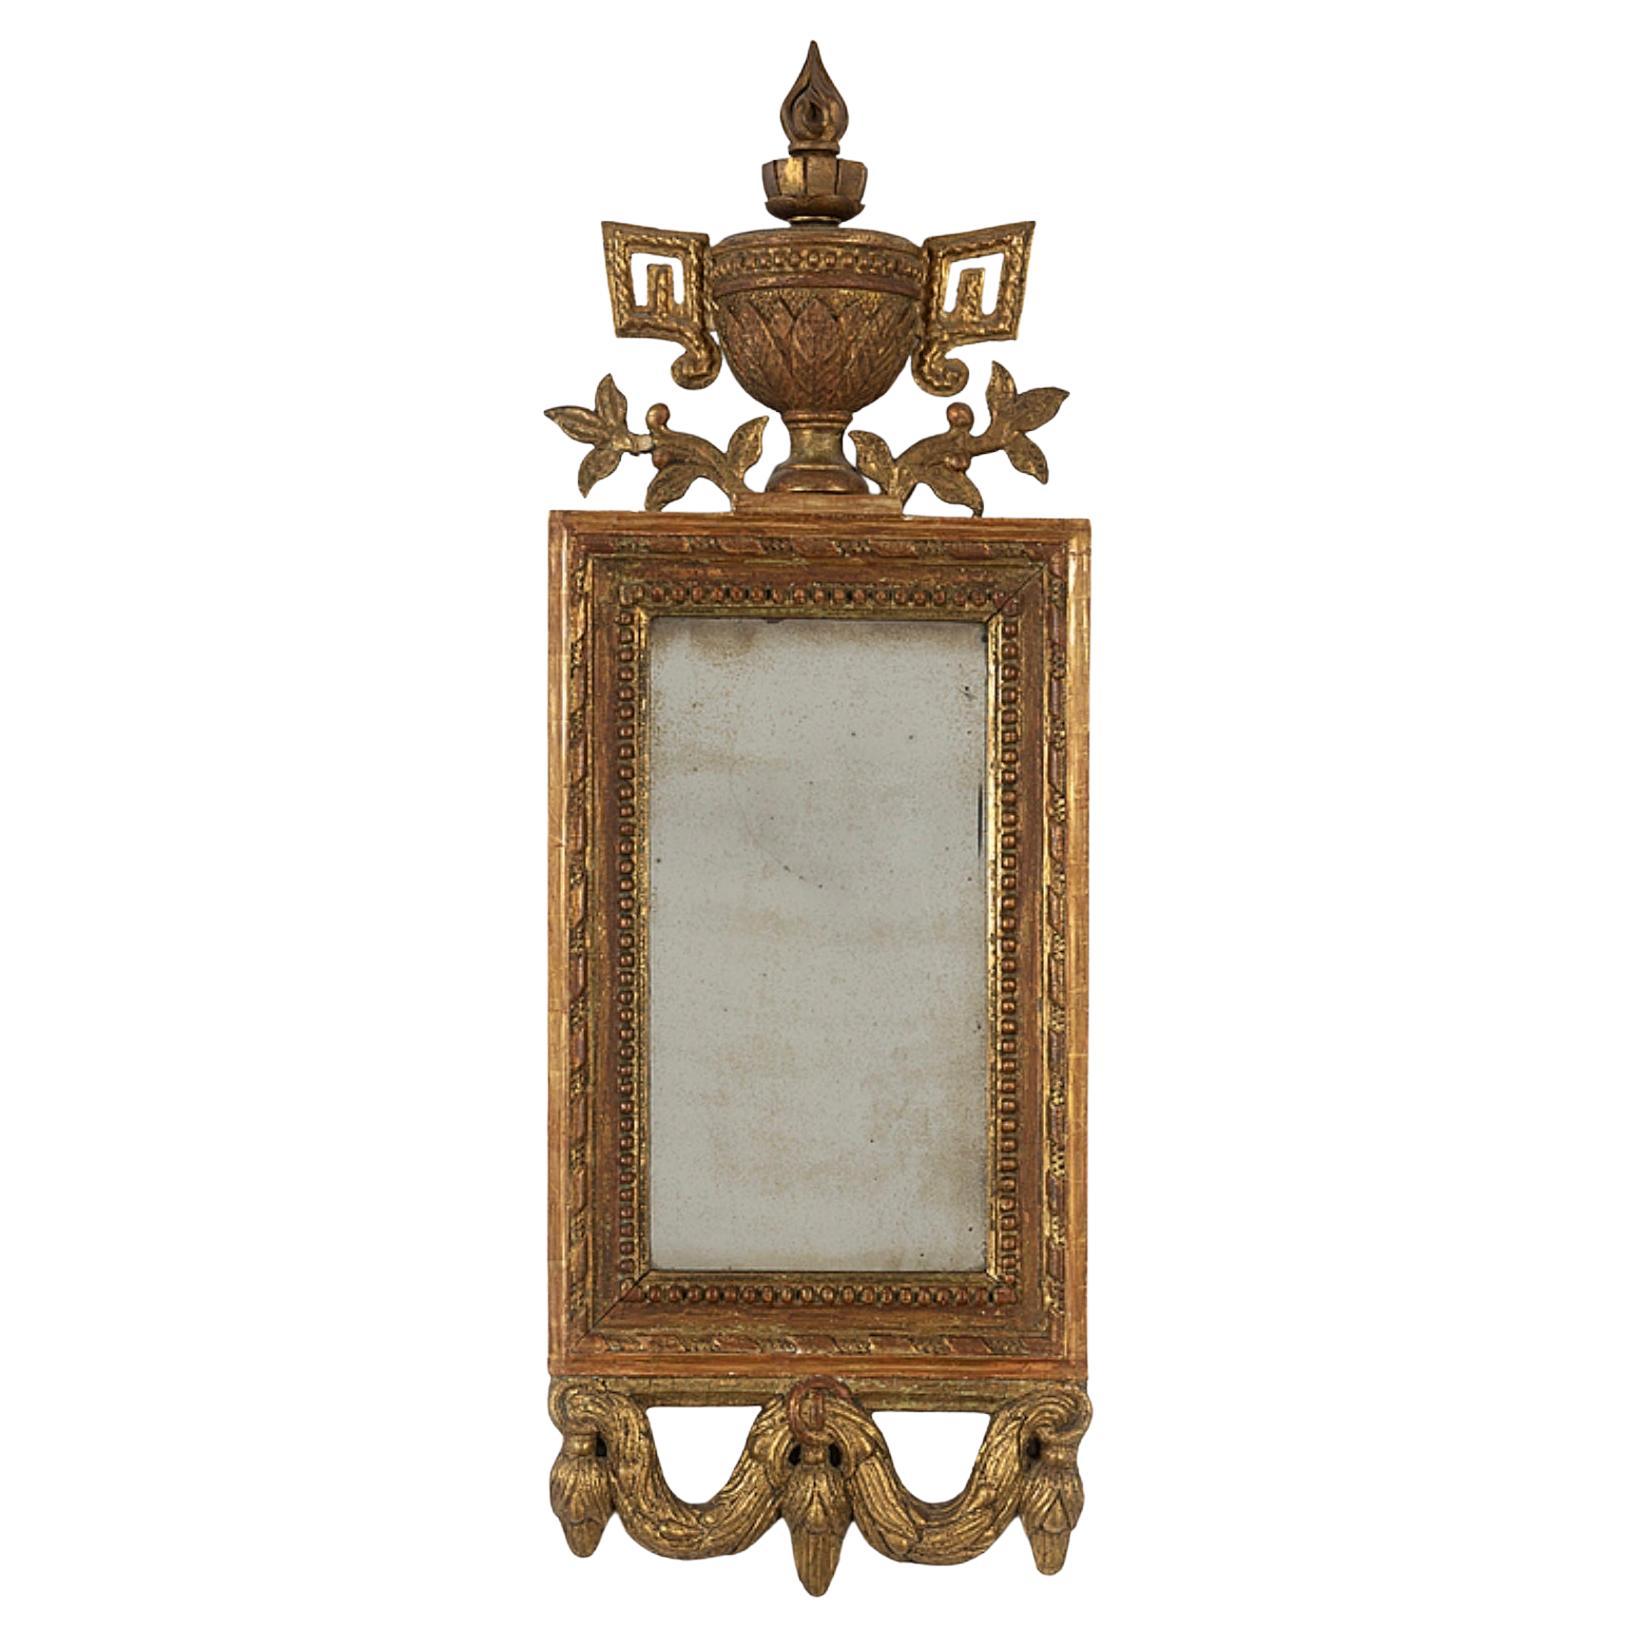 Circa 18th Century Swedish Gilt Mirror with Urn & Swag Decoration 